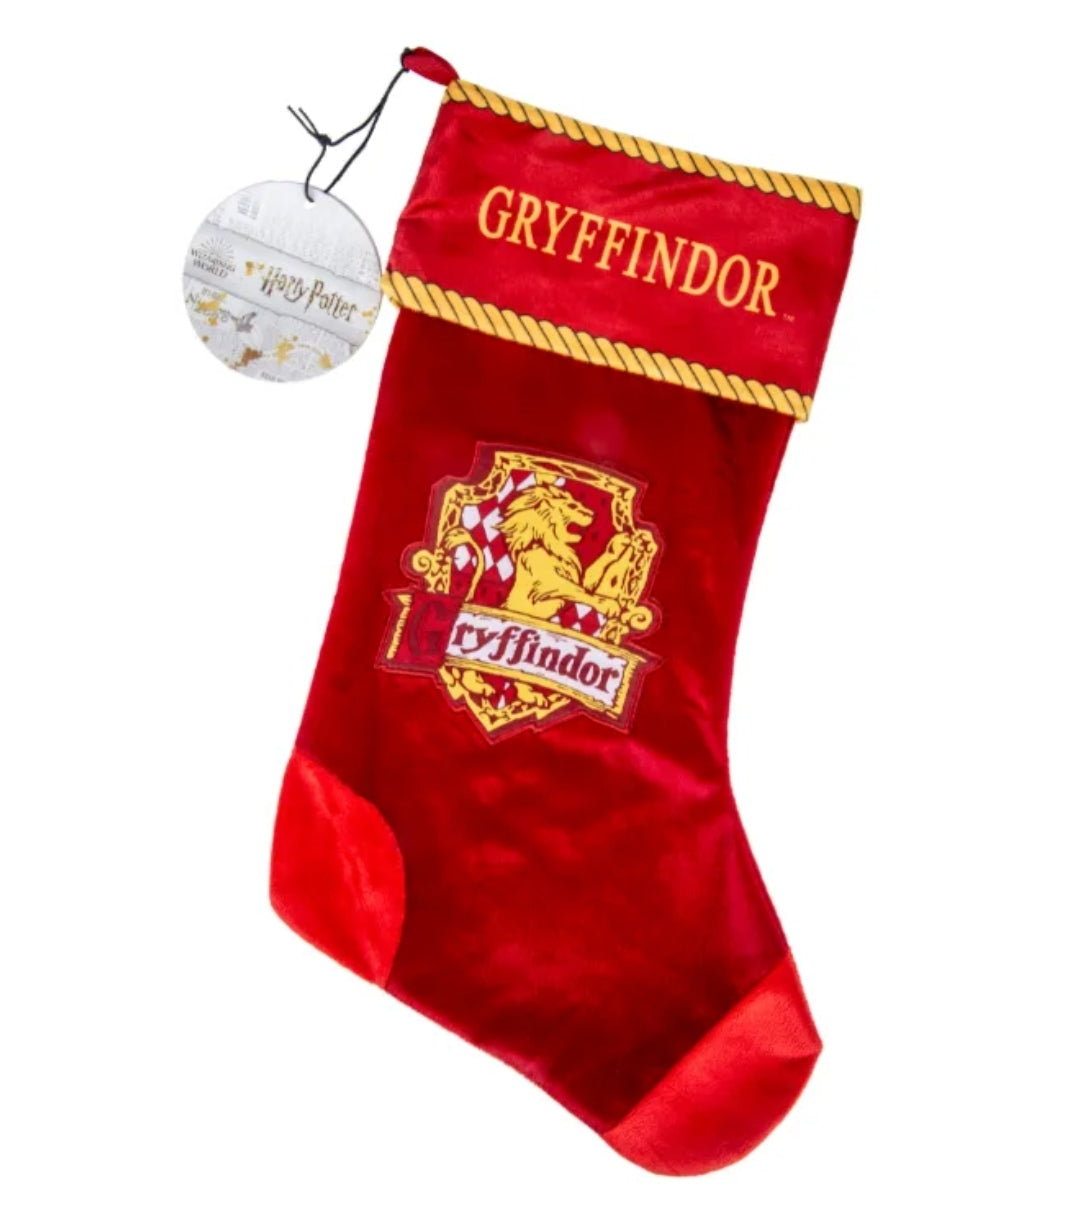 Harry Potter Christmas stockings